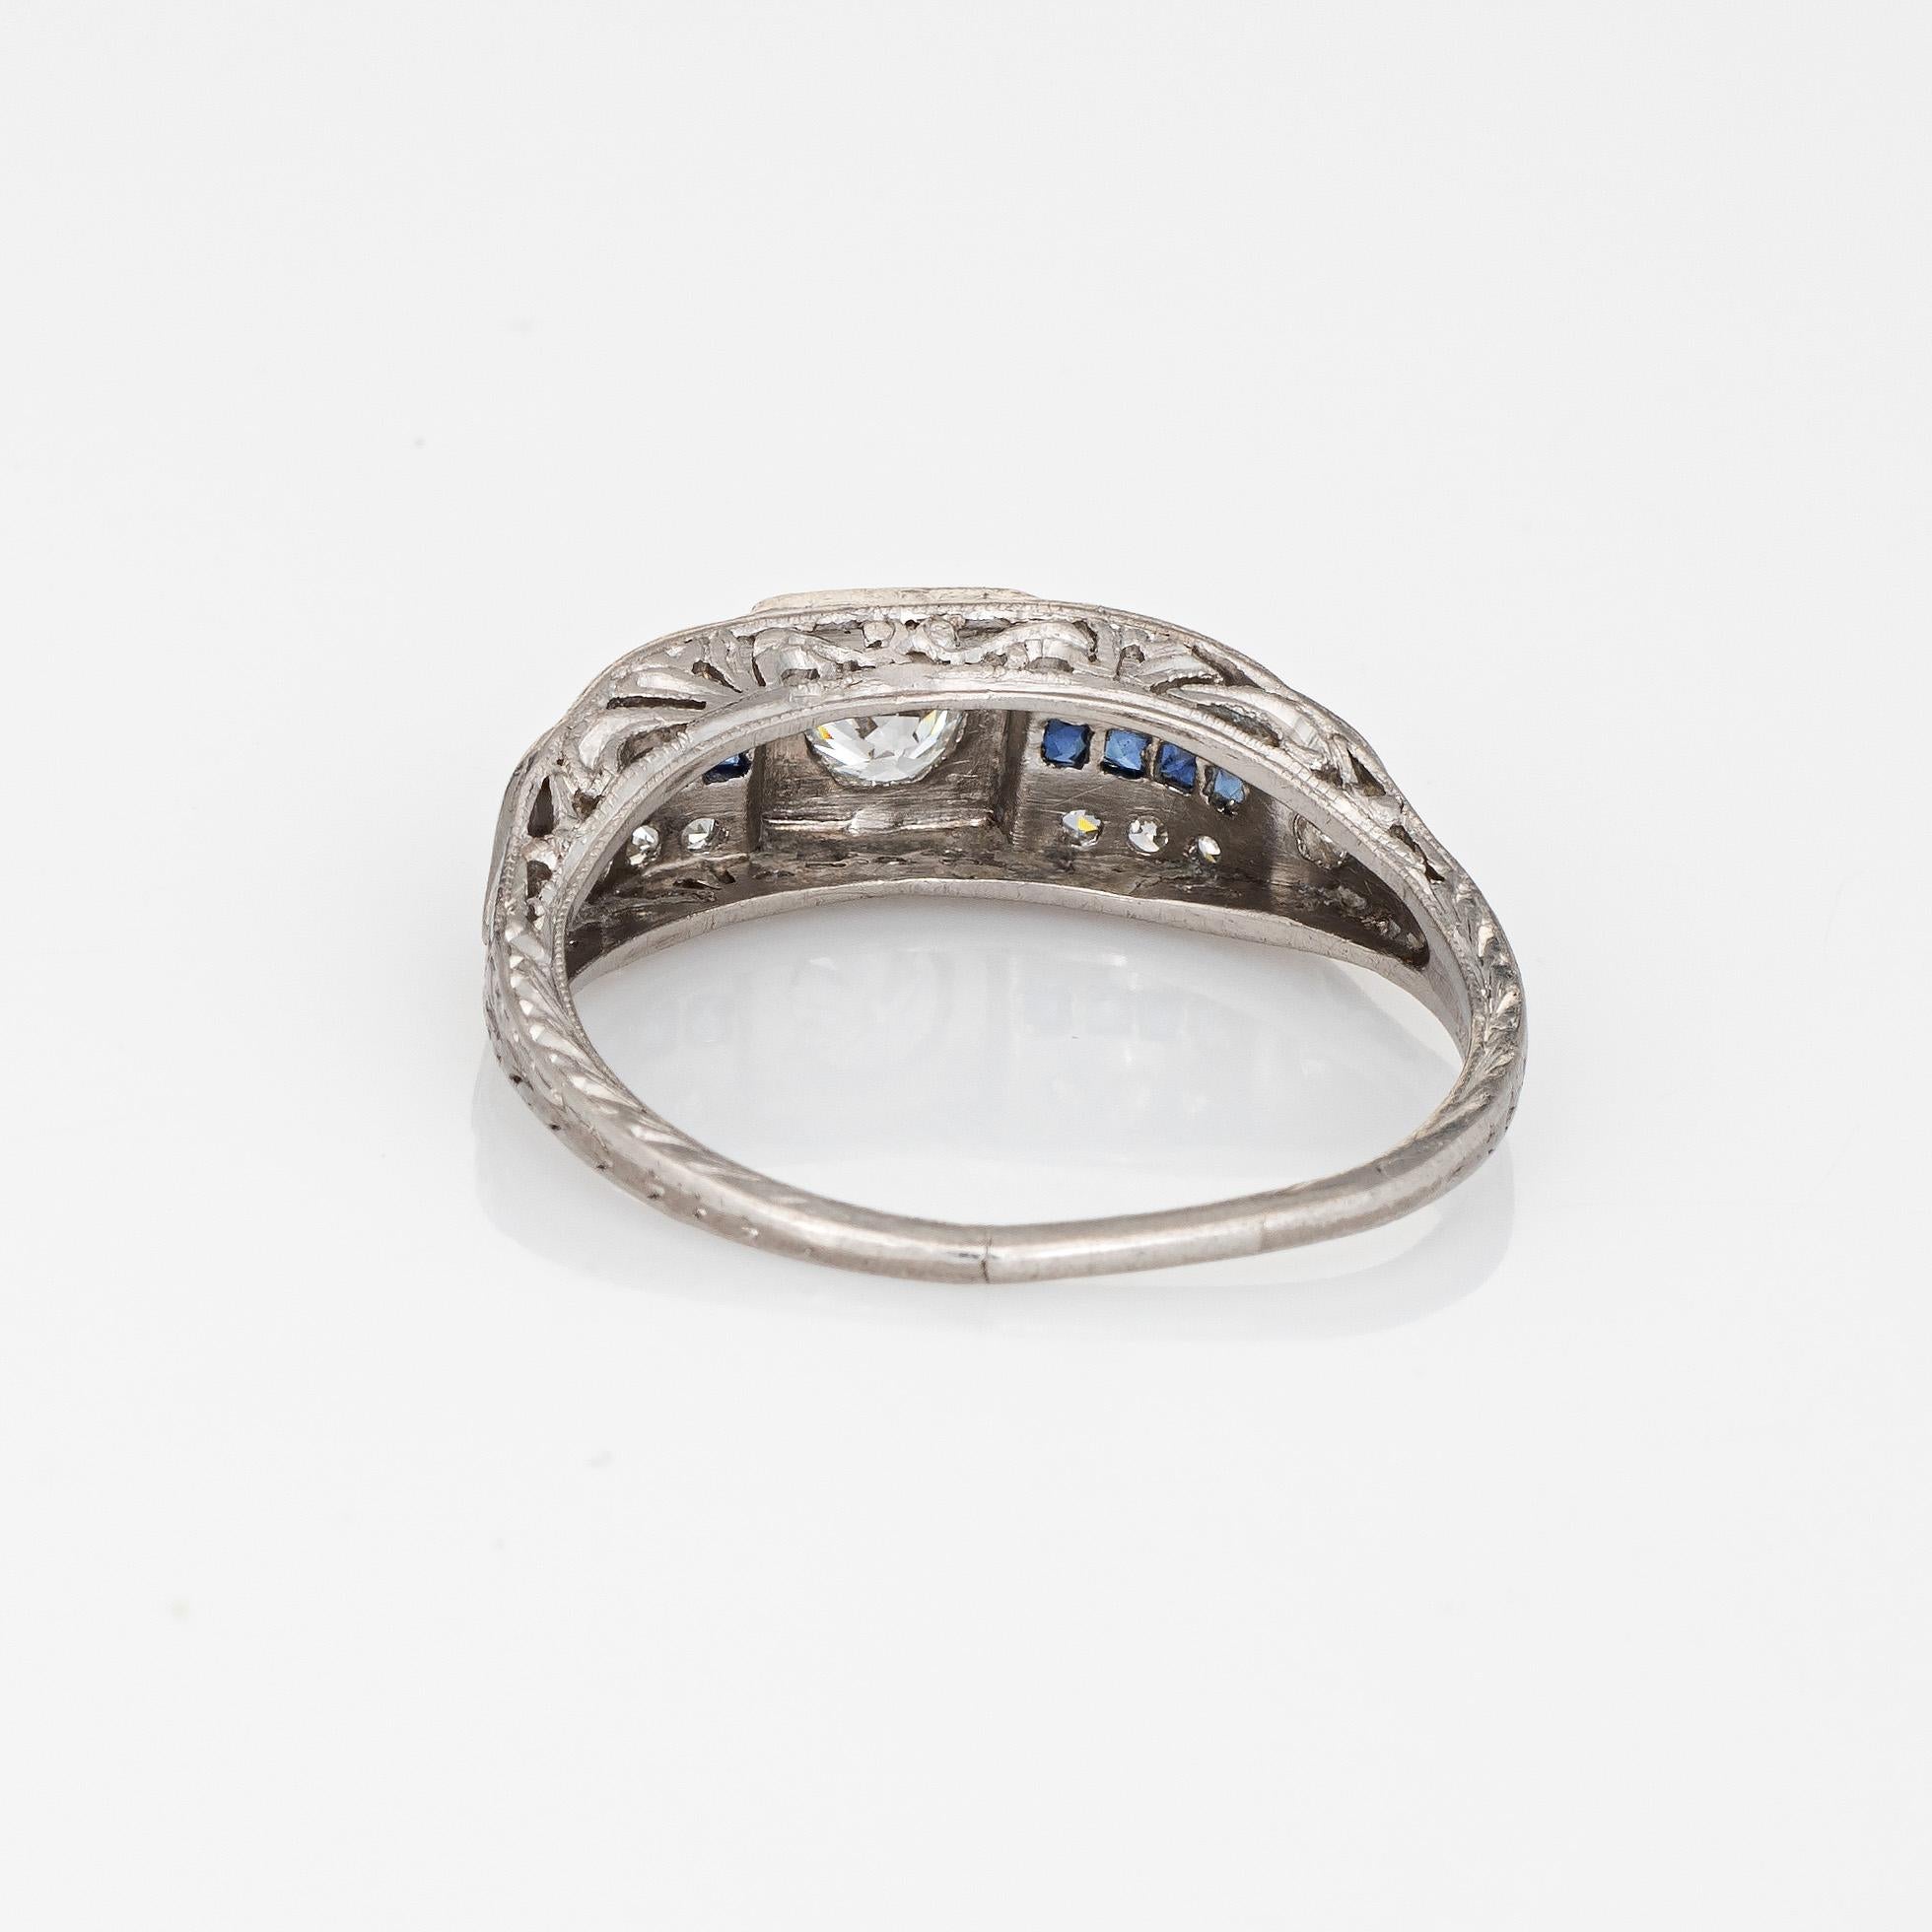 Women's Vintage Art Deco Diamond Ring French Cut Sapphire Platinum Band Fine Jewelry